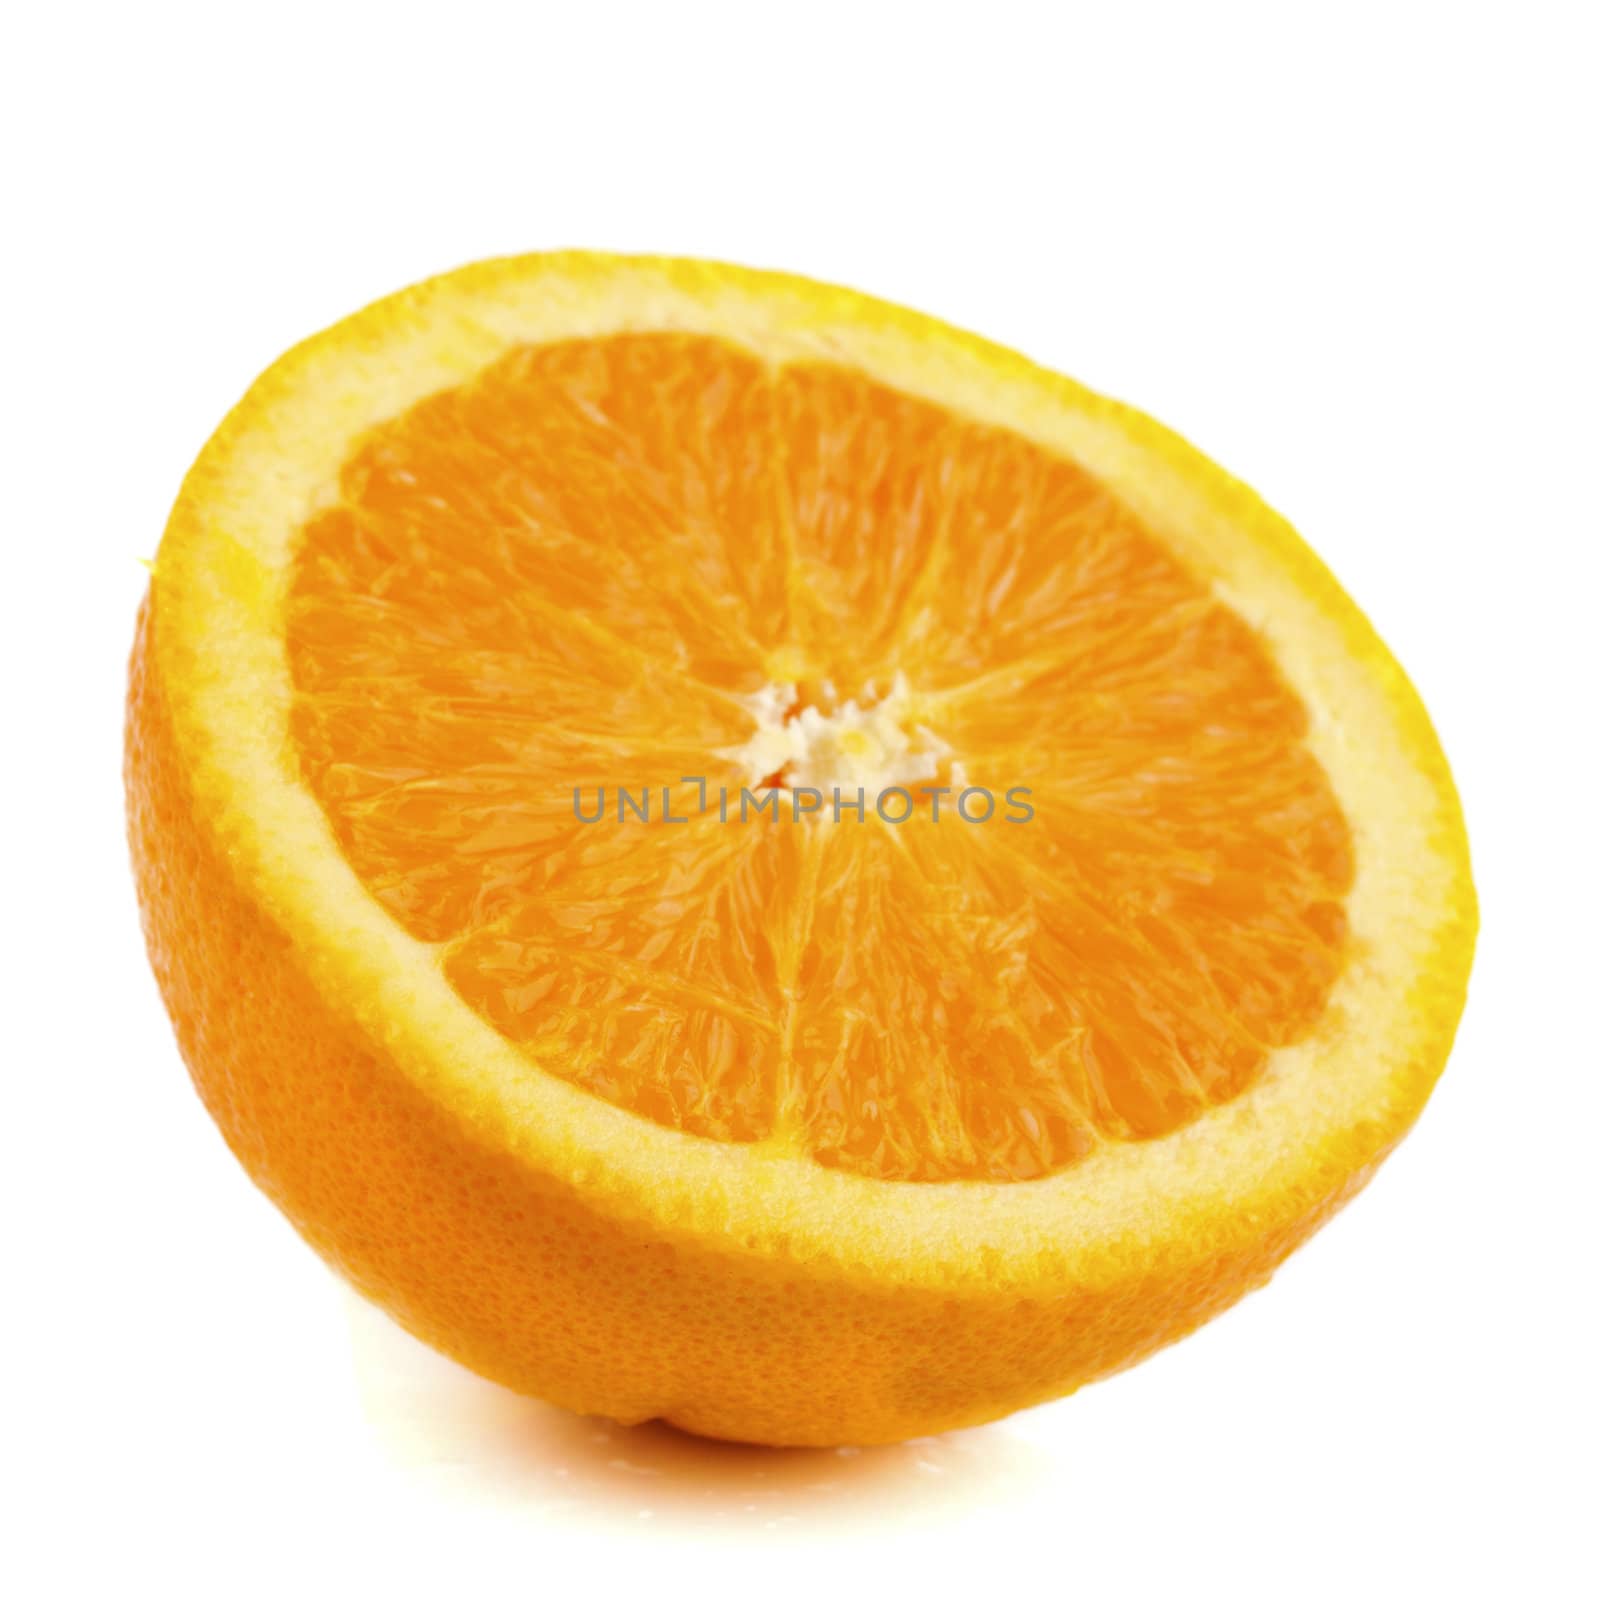 Half-cut fresh juicy orange on white background